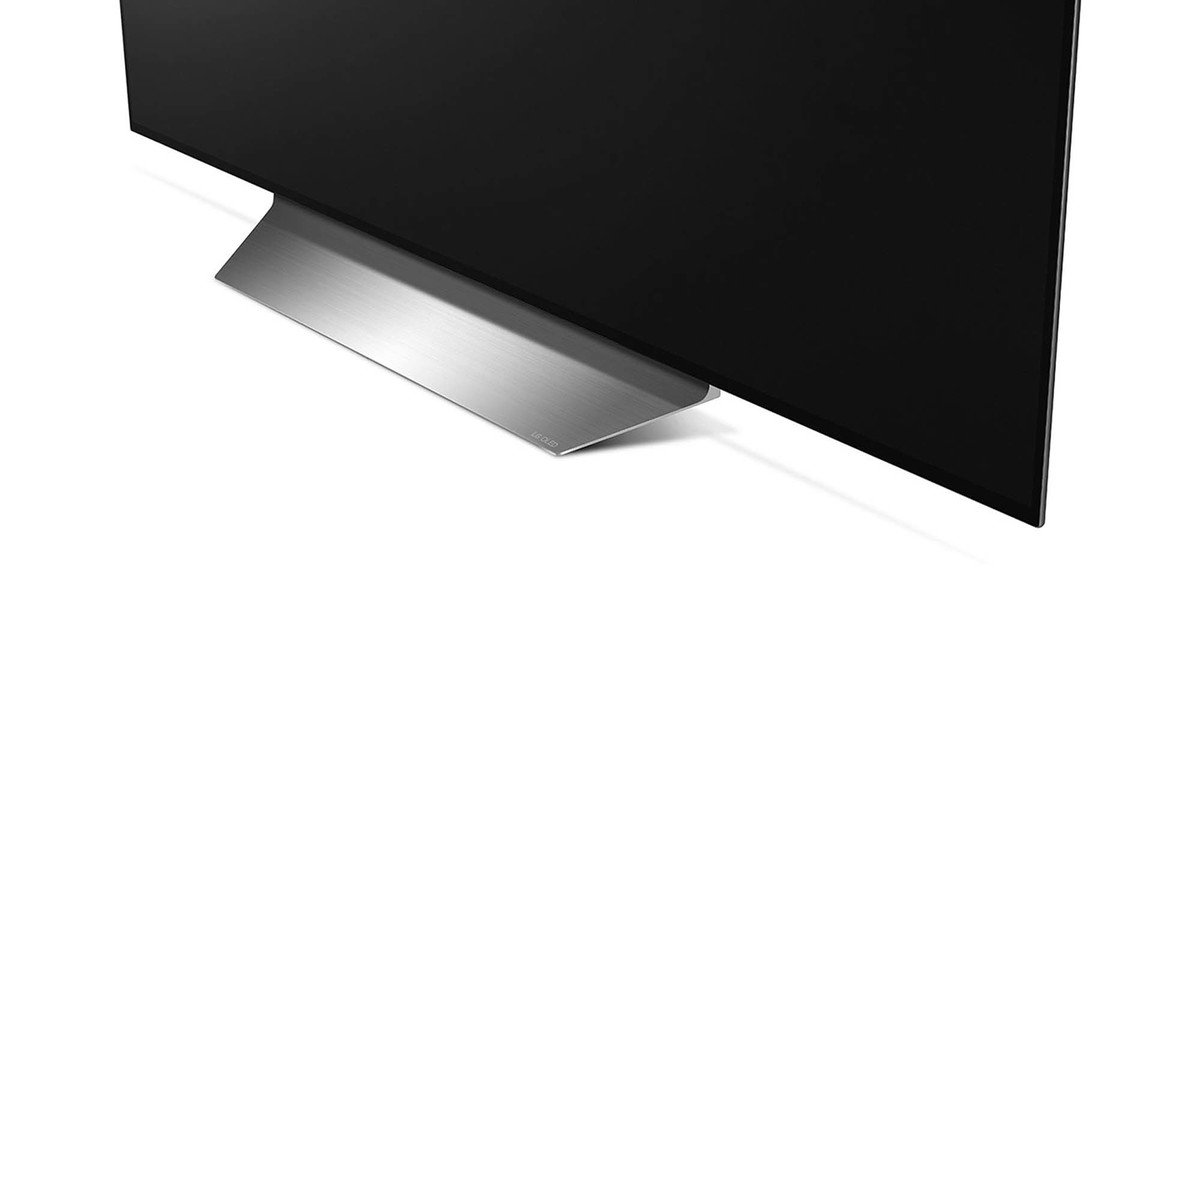 LG 4K Ultra HD Smart OLED TV OLED77C9PVB 77"